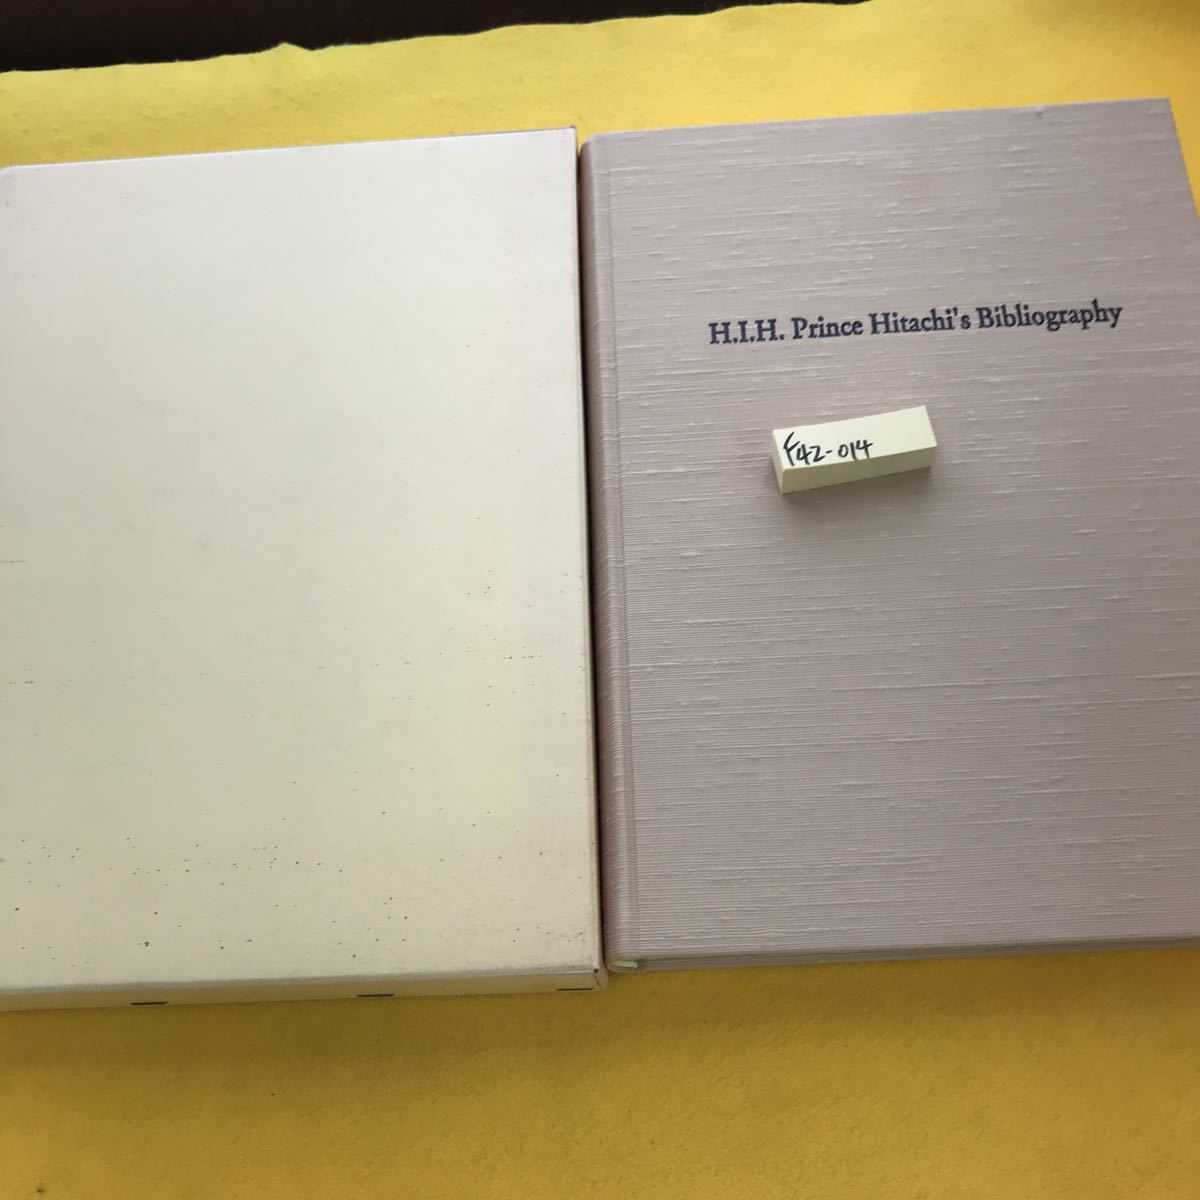 F42-014 H.I.H. Prince Hitachi's Bibliography